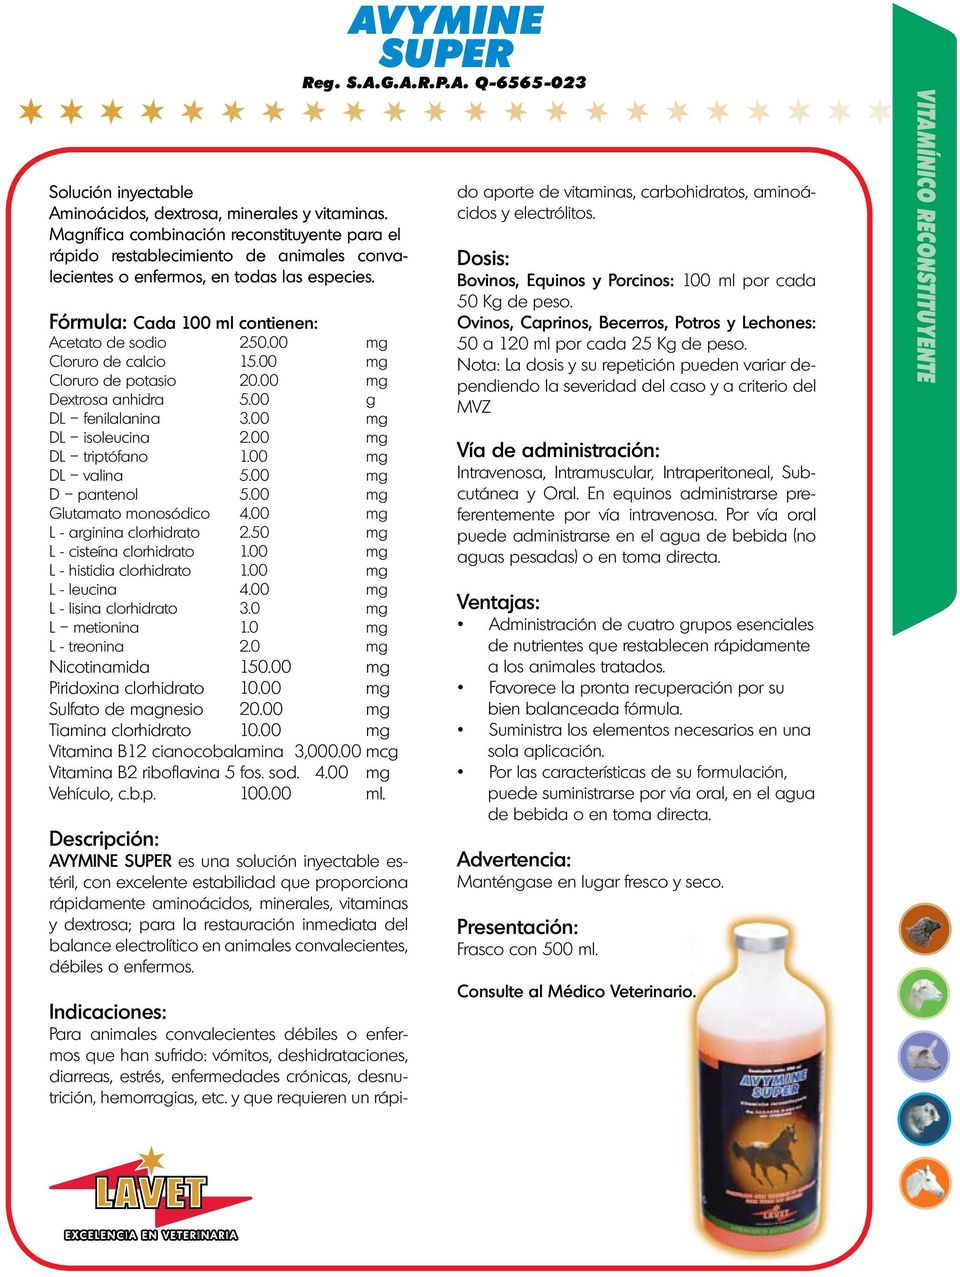 00 mg D pantenol 5.00 mg Glutamato monosódico 4.00 mg L - arginina clorhidrato 2.50 mg L - cisteína clorhidrato 1.00 mg L - histidia clorhidrato 1.00 mg L - leucina 4.00 mg L - lisina clorhidrato 3.